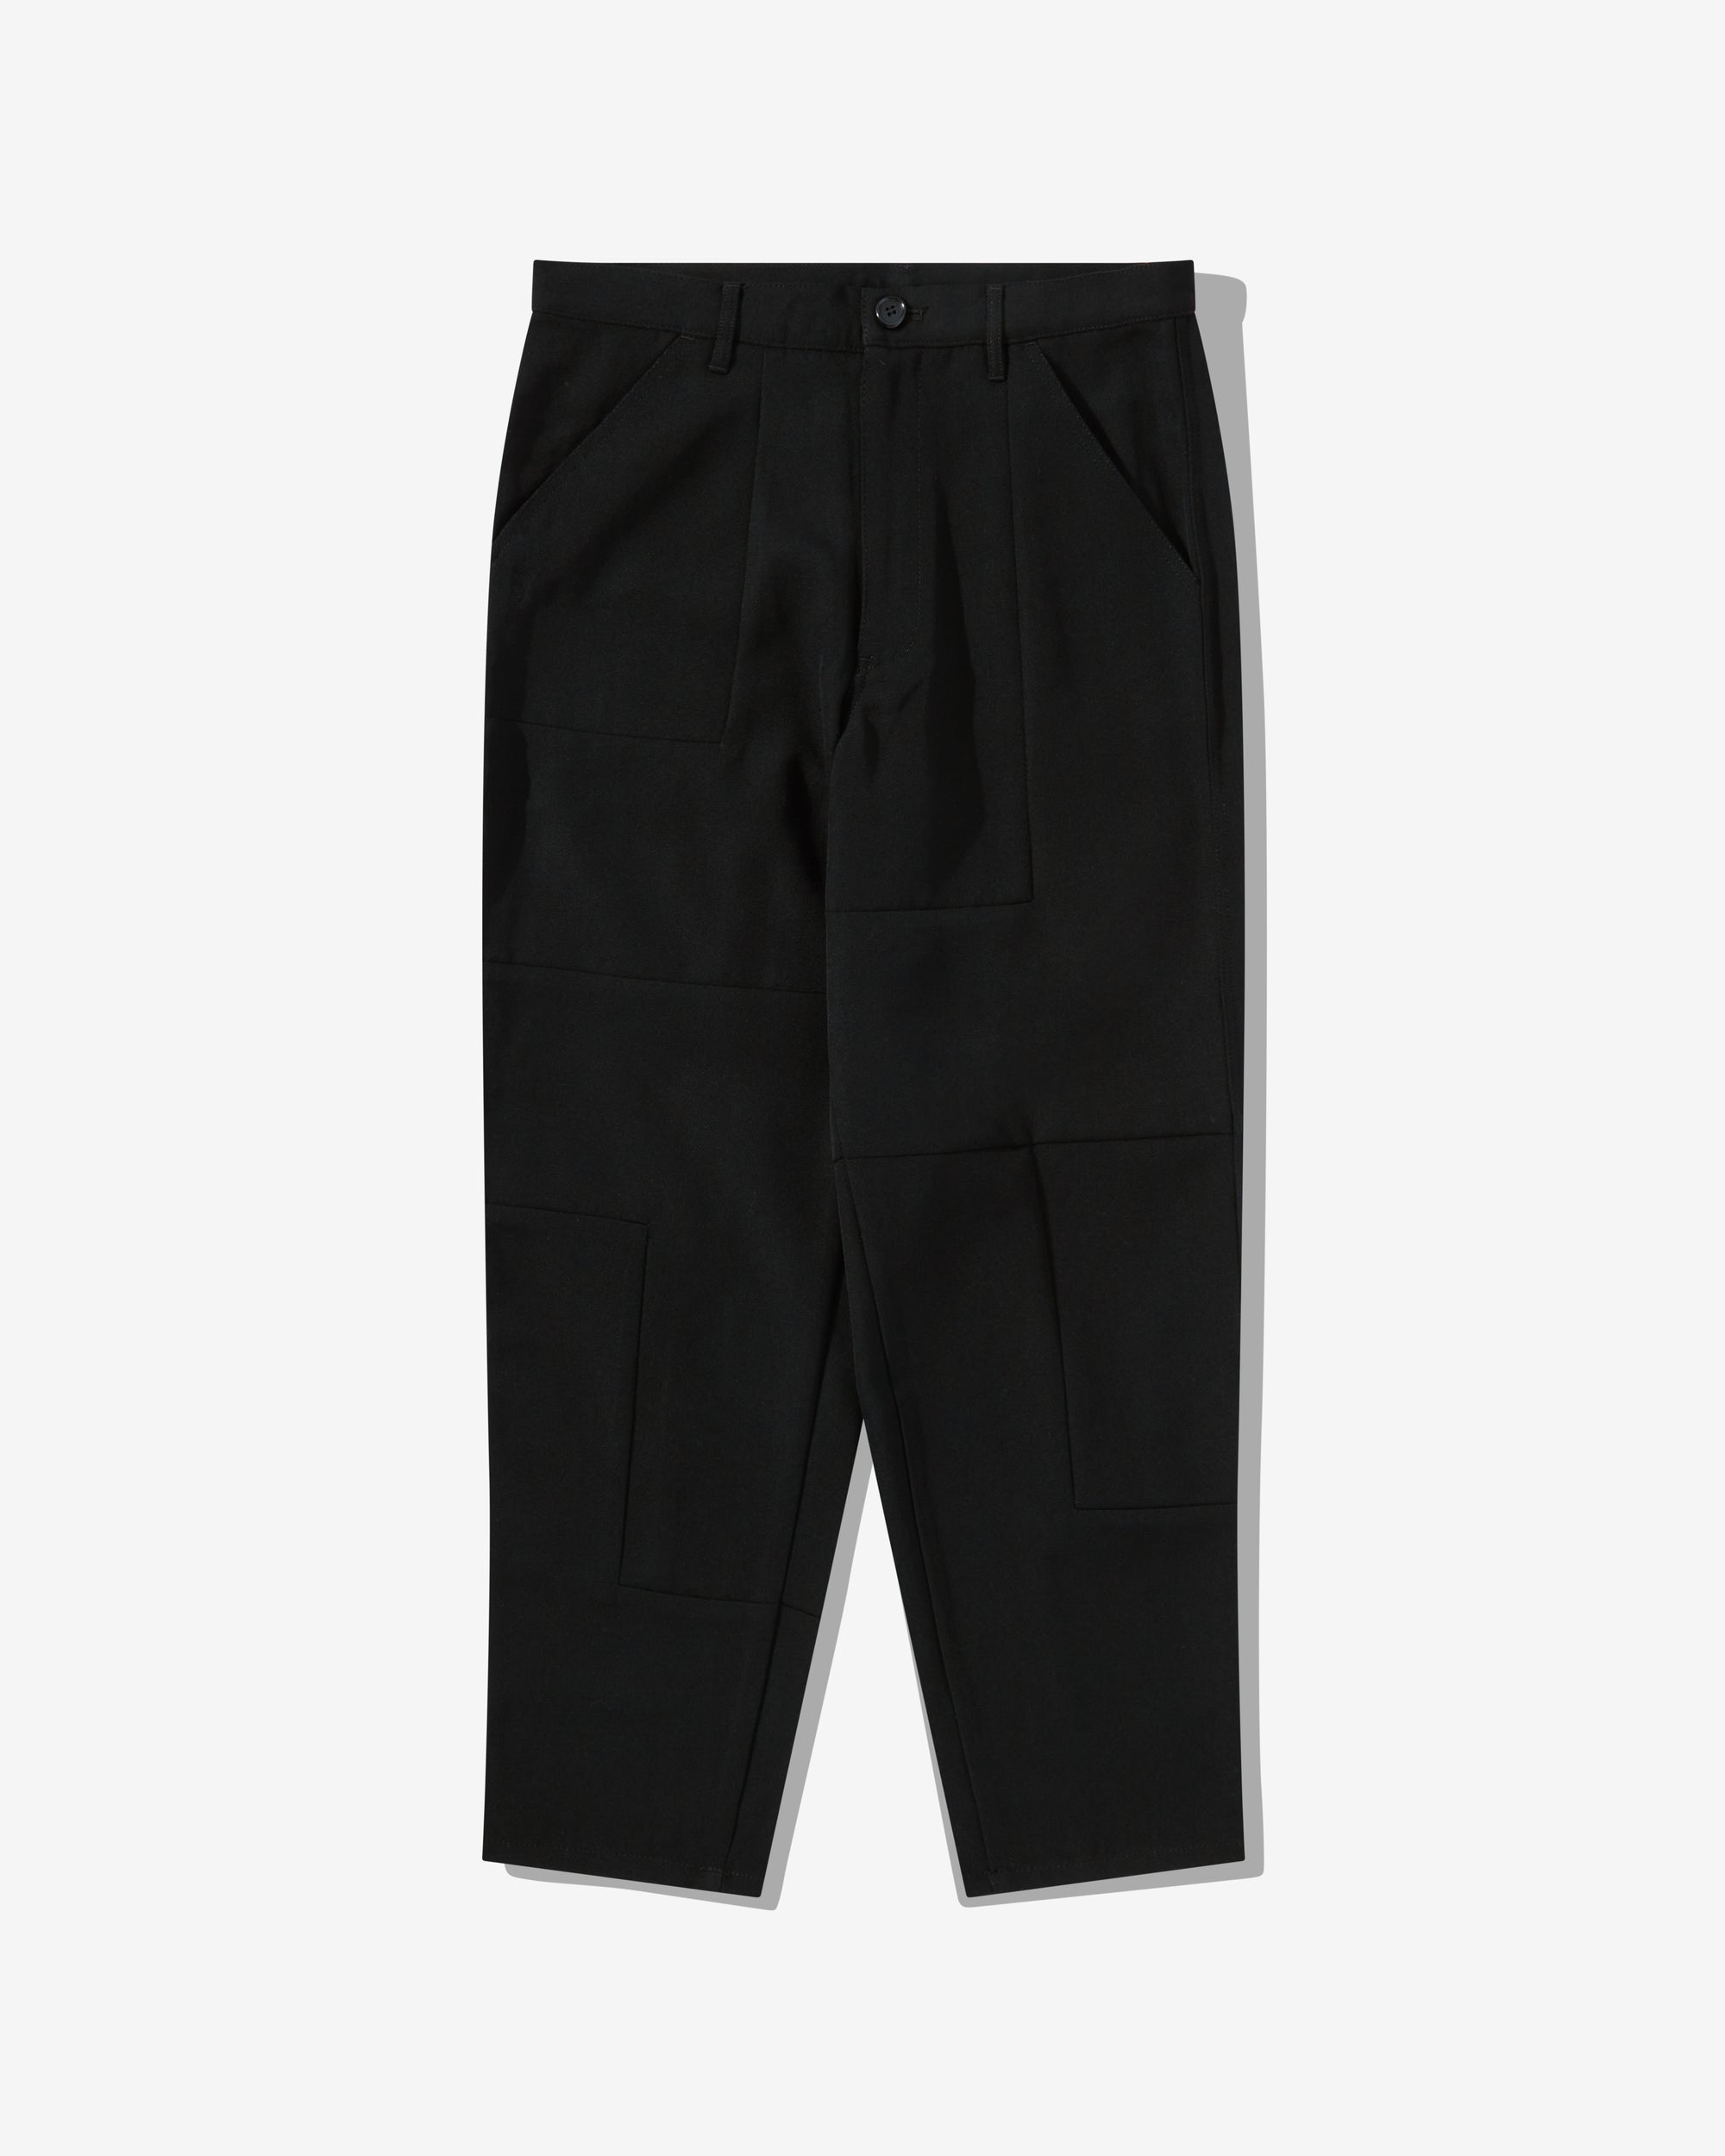 CDG Shirt - Men's Wool Gabardine Trousers - (Black) view 1